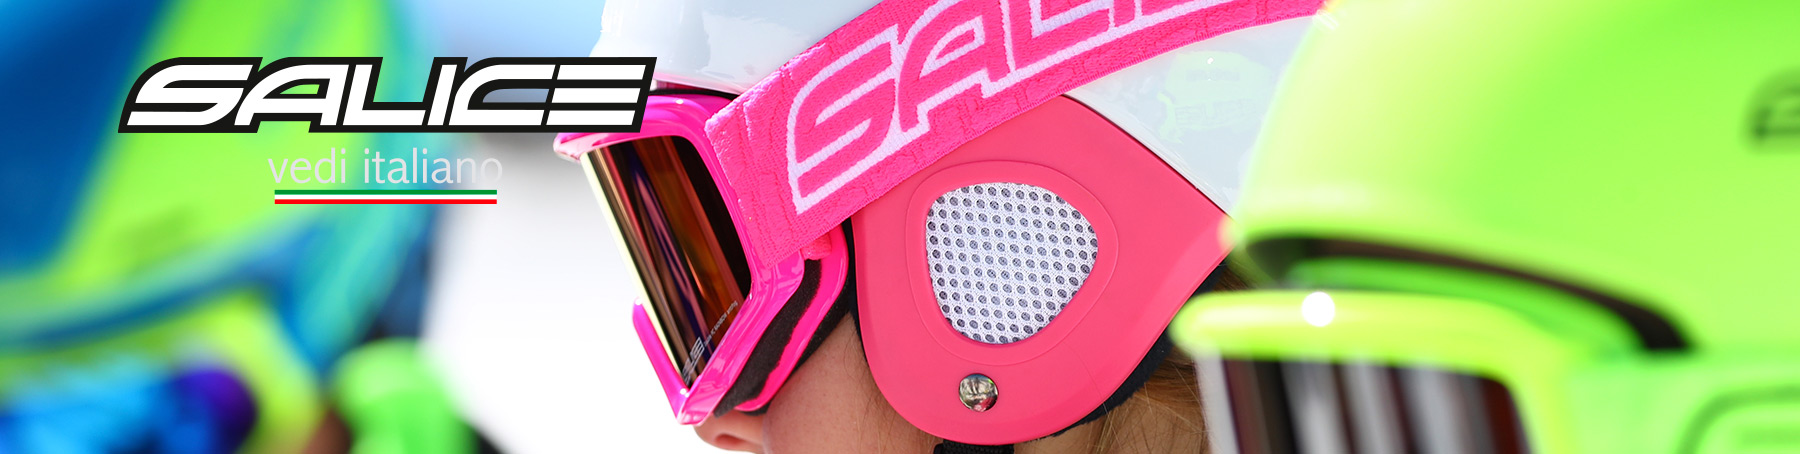 ski snowboard goggles